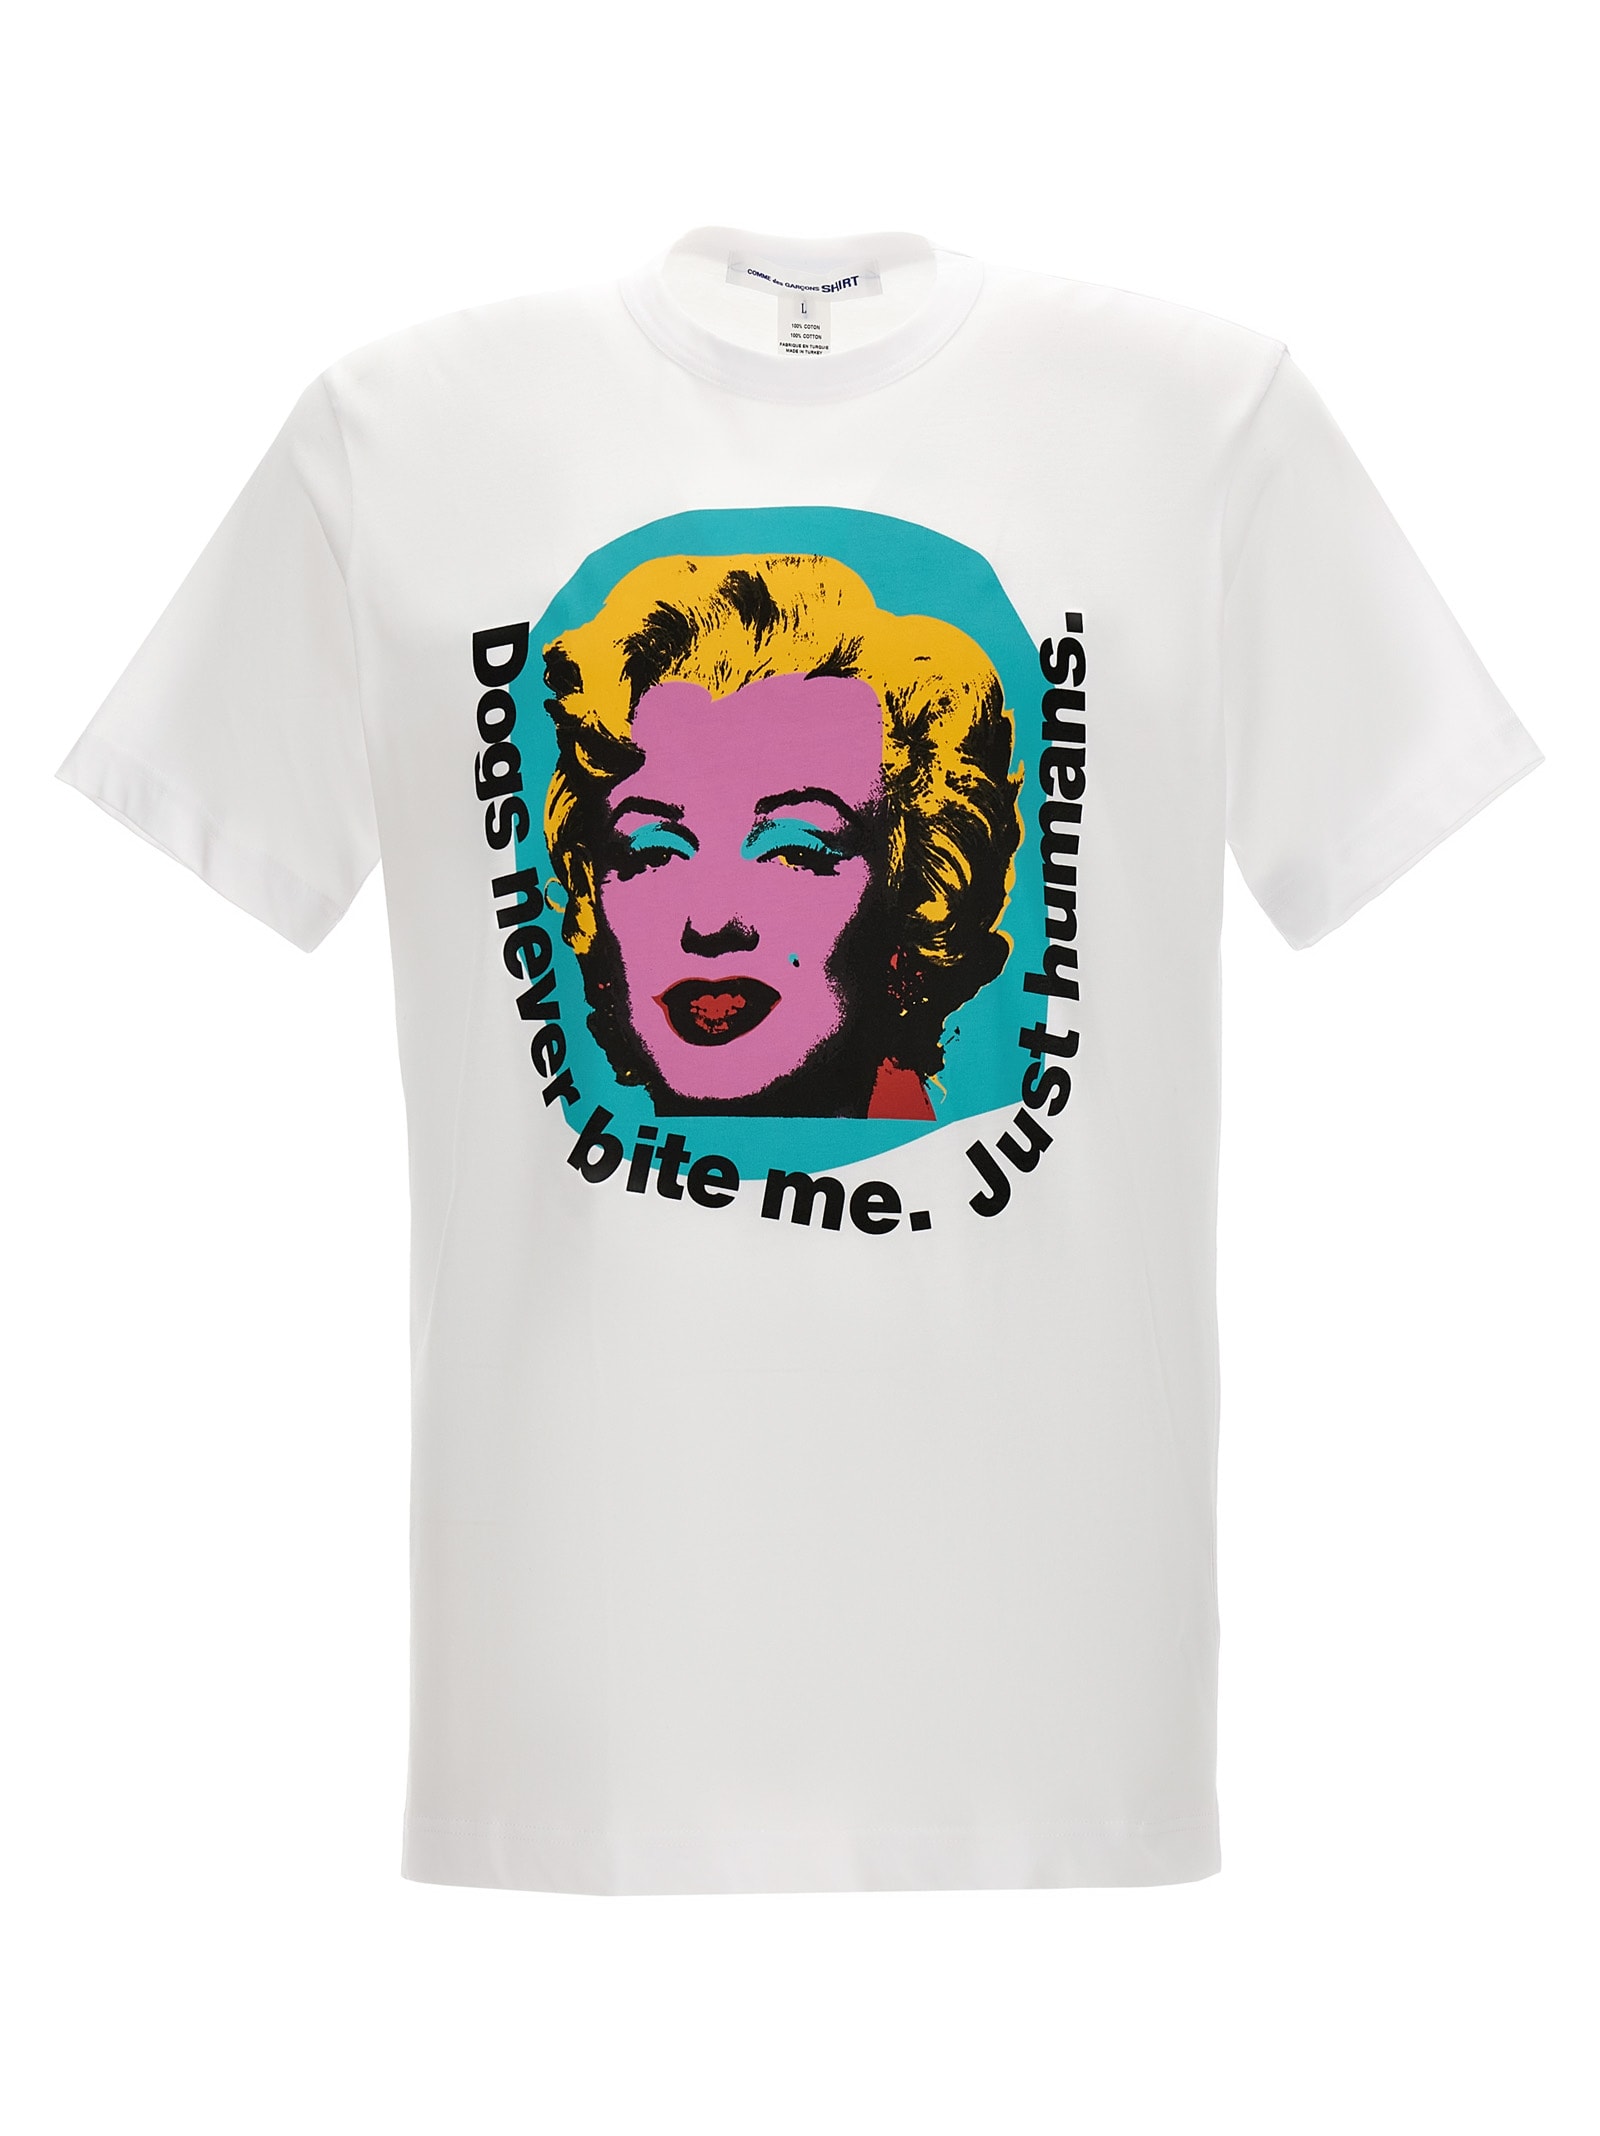 andy Warhol T-shirt